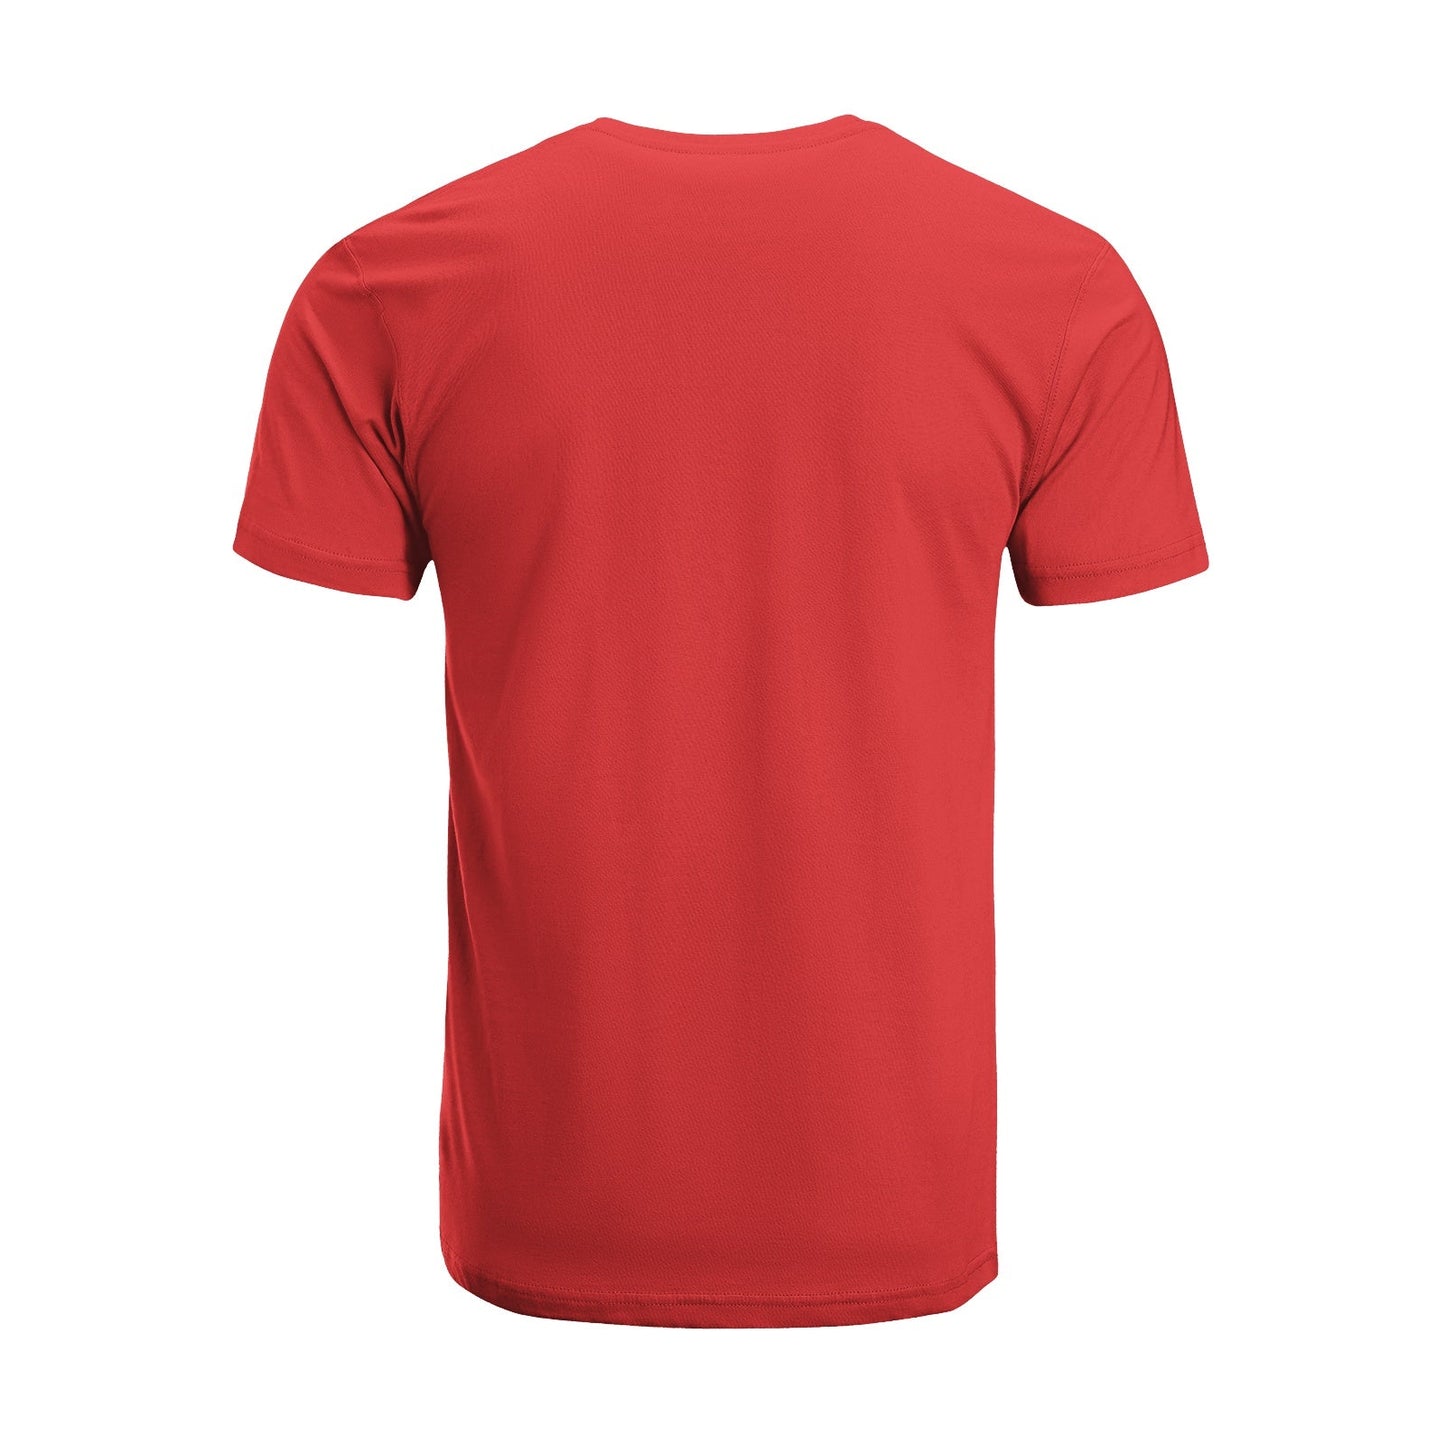 Unisex Short Sleeve Crew Neck Cotton Jersey T-Shirt MOM 01